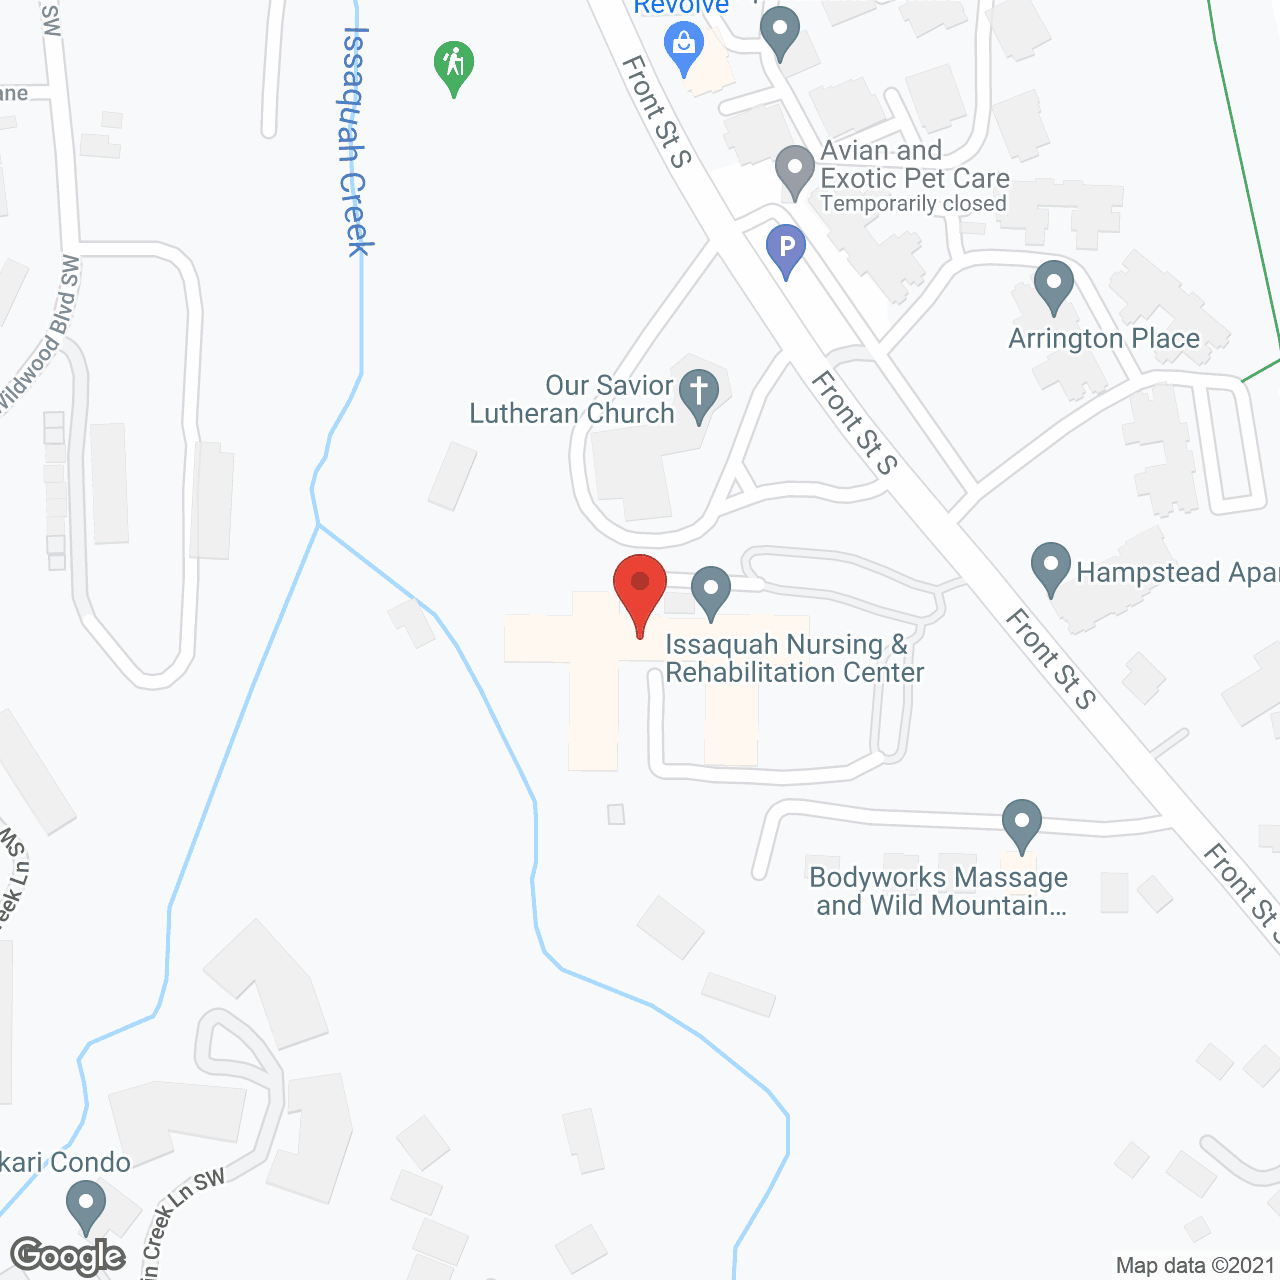 Issaquah Nursing and Rehabilitation Center in google map